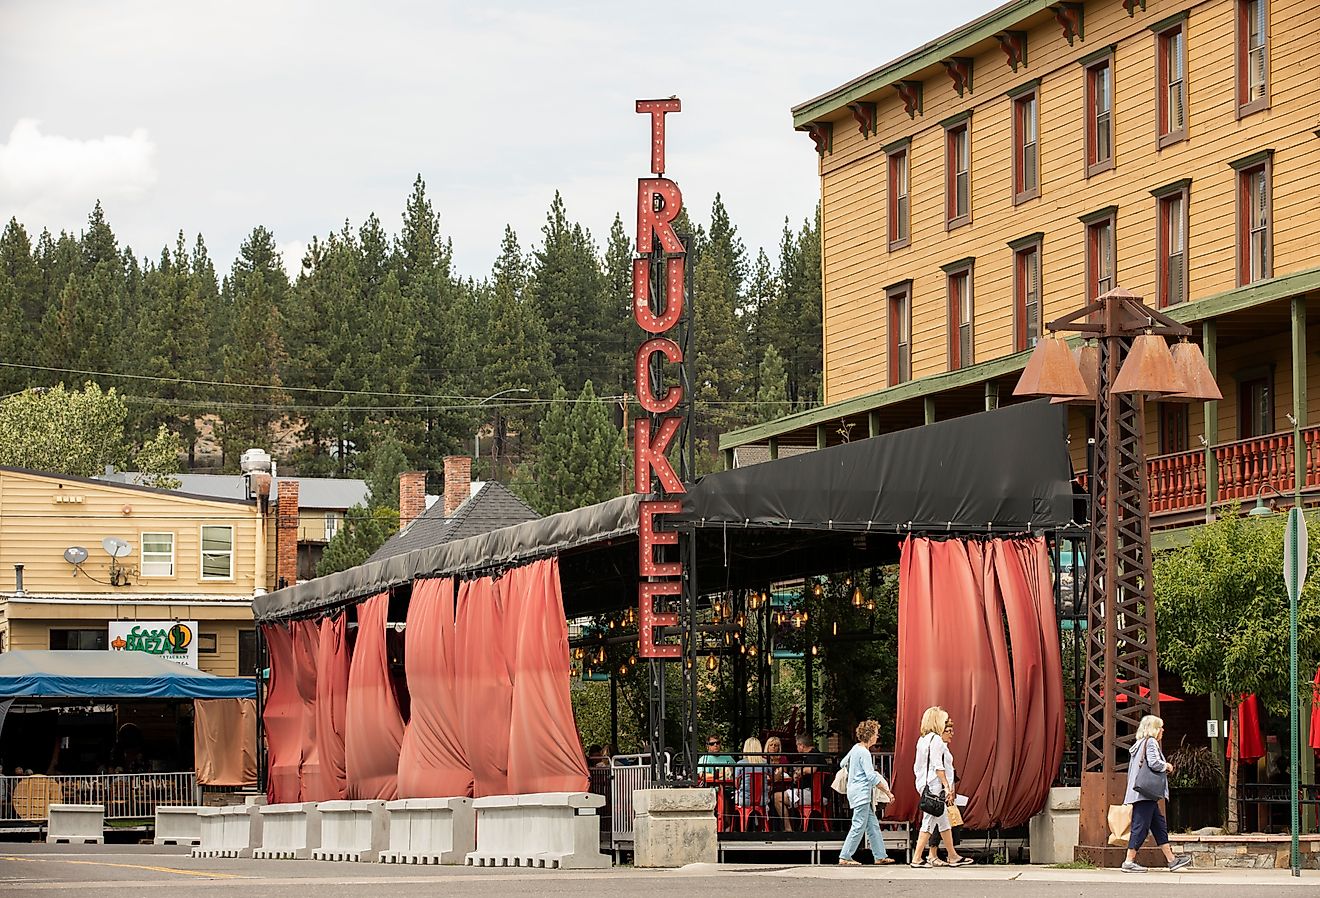 Historic downtown Truckee, California. Image credit Matt Gush via Shutterstock